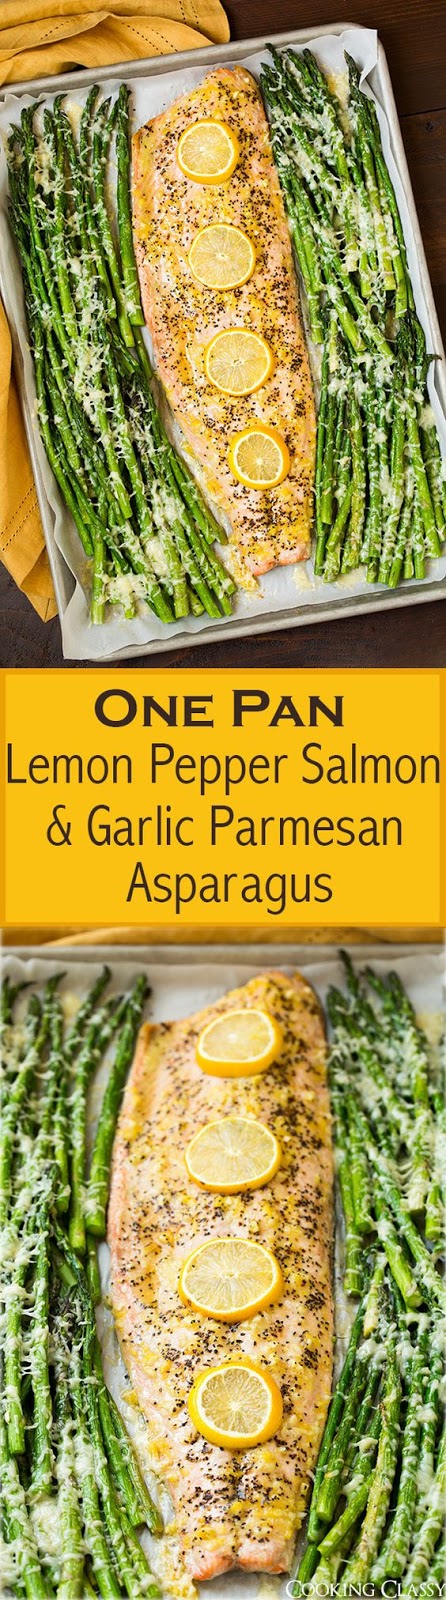 One Pan Roasted Lemon Pepper Salmon and Garlic Parmesan Asparagus